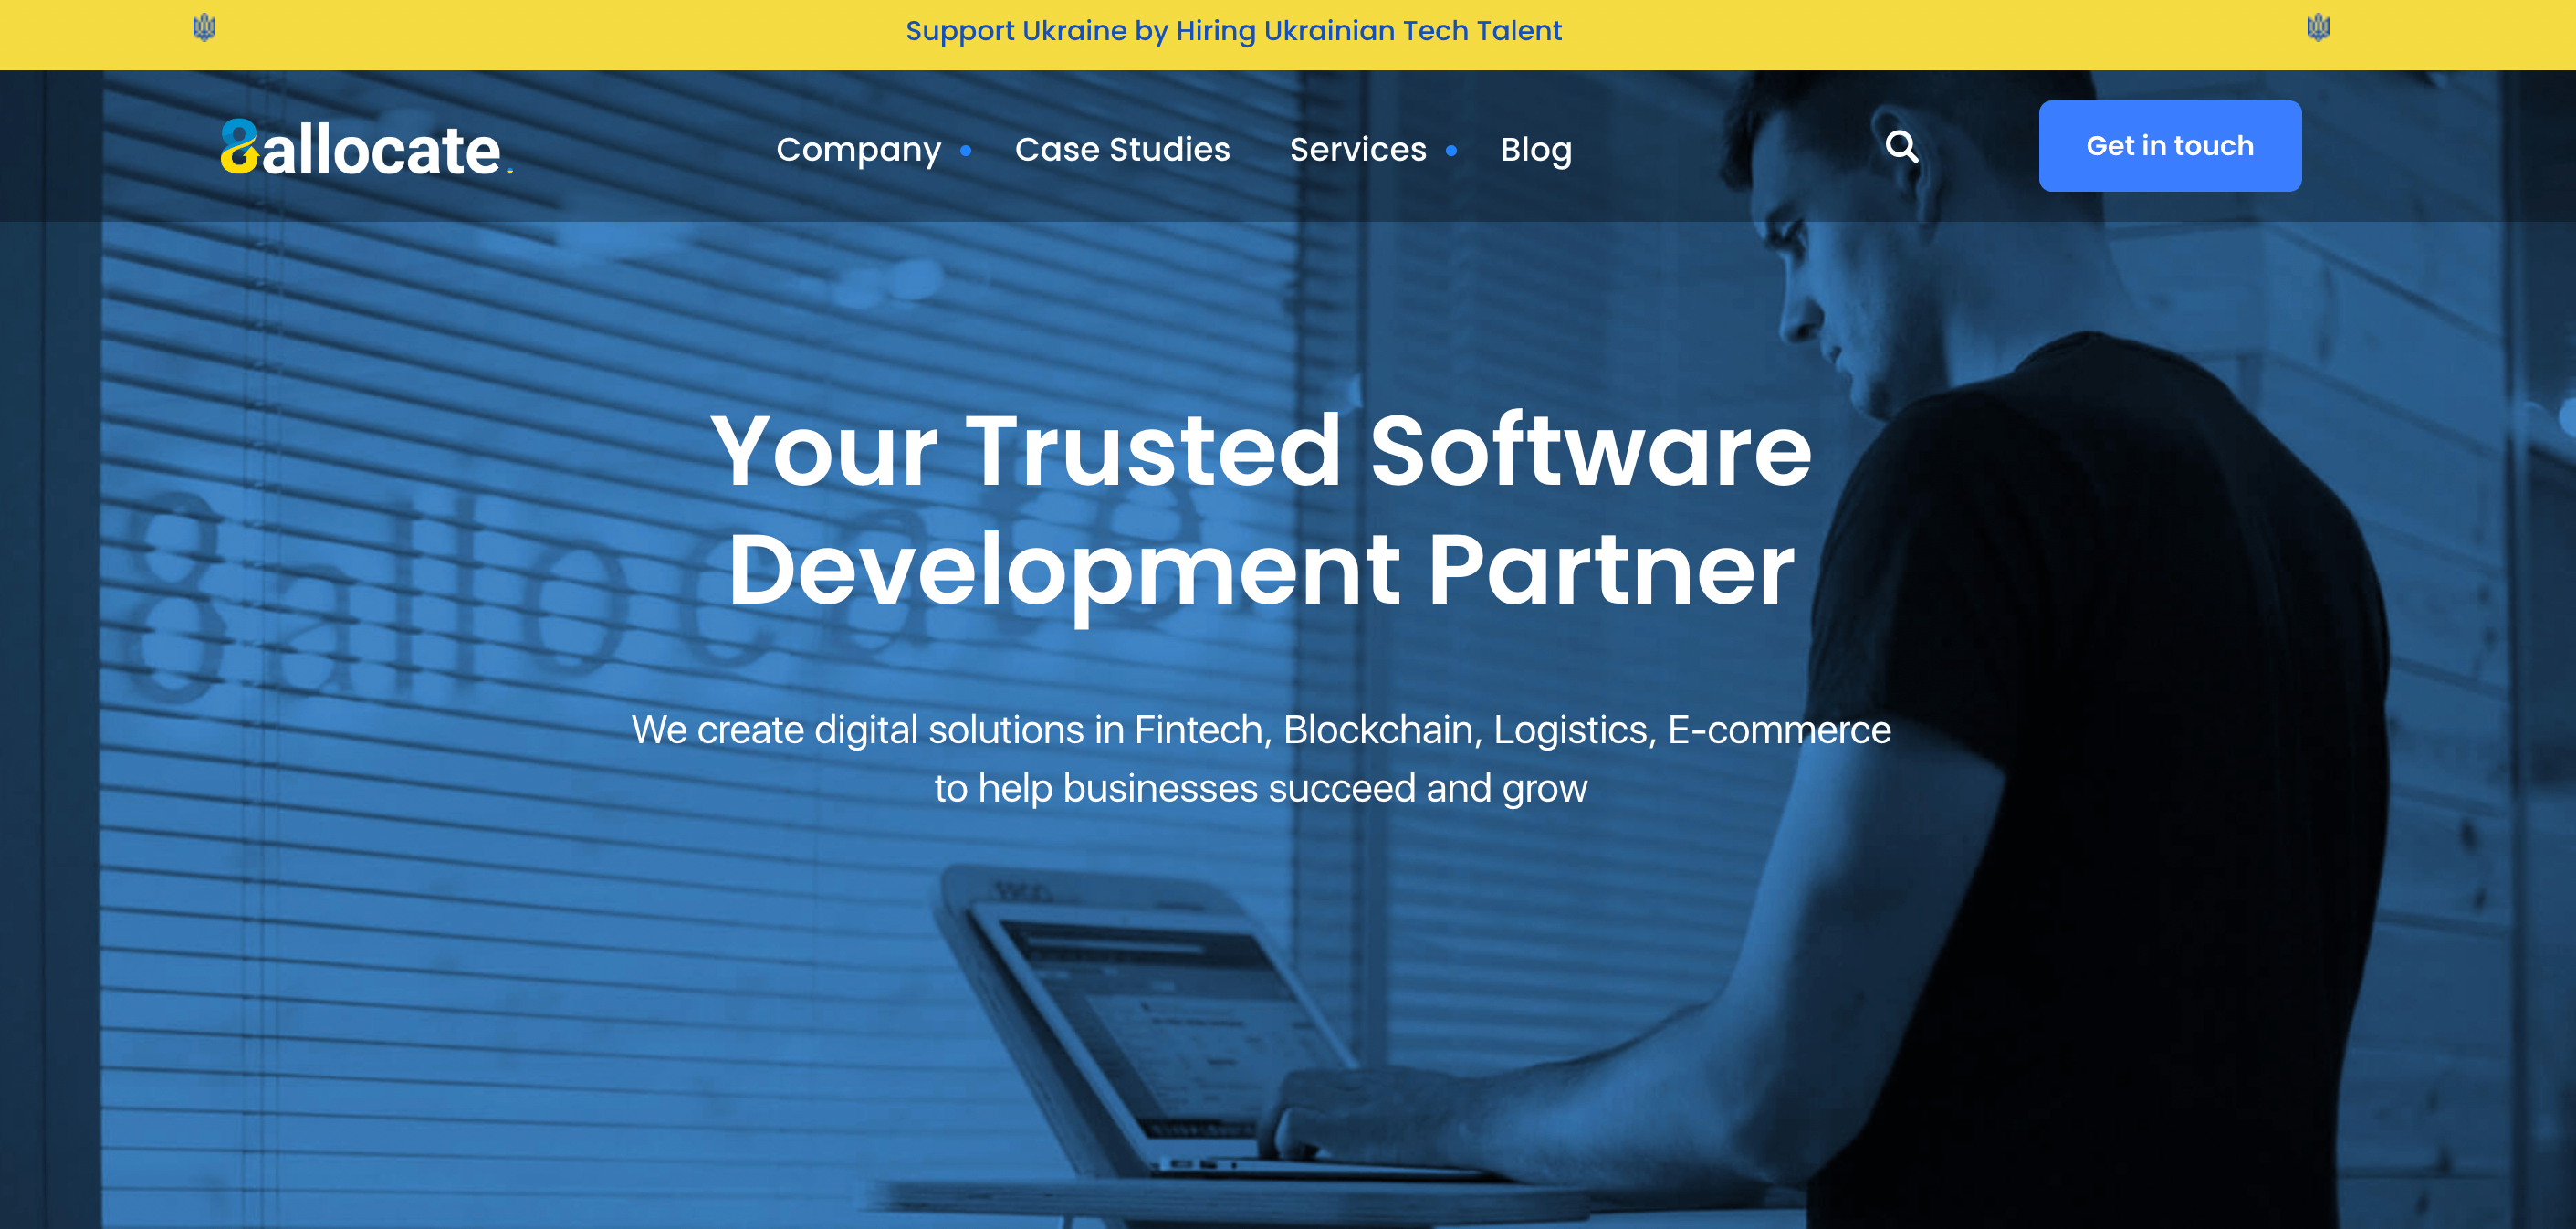 8allocate best Ukrainian software development company